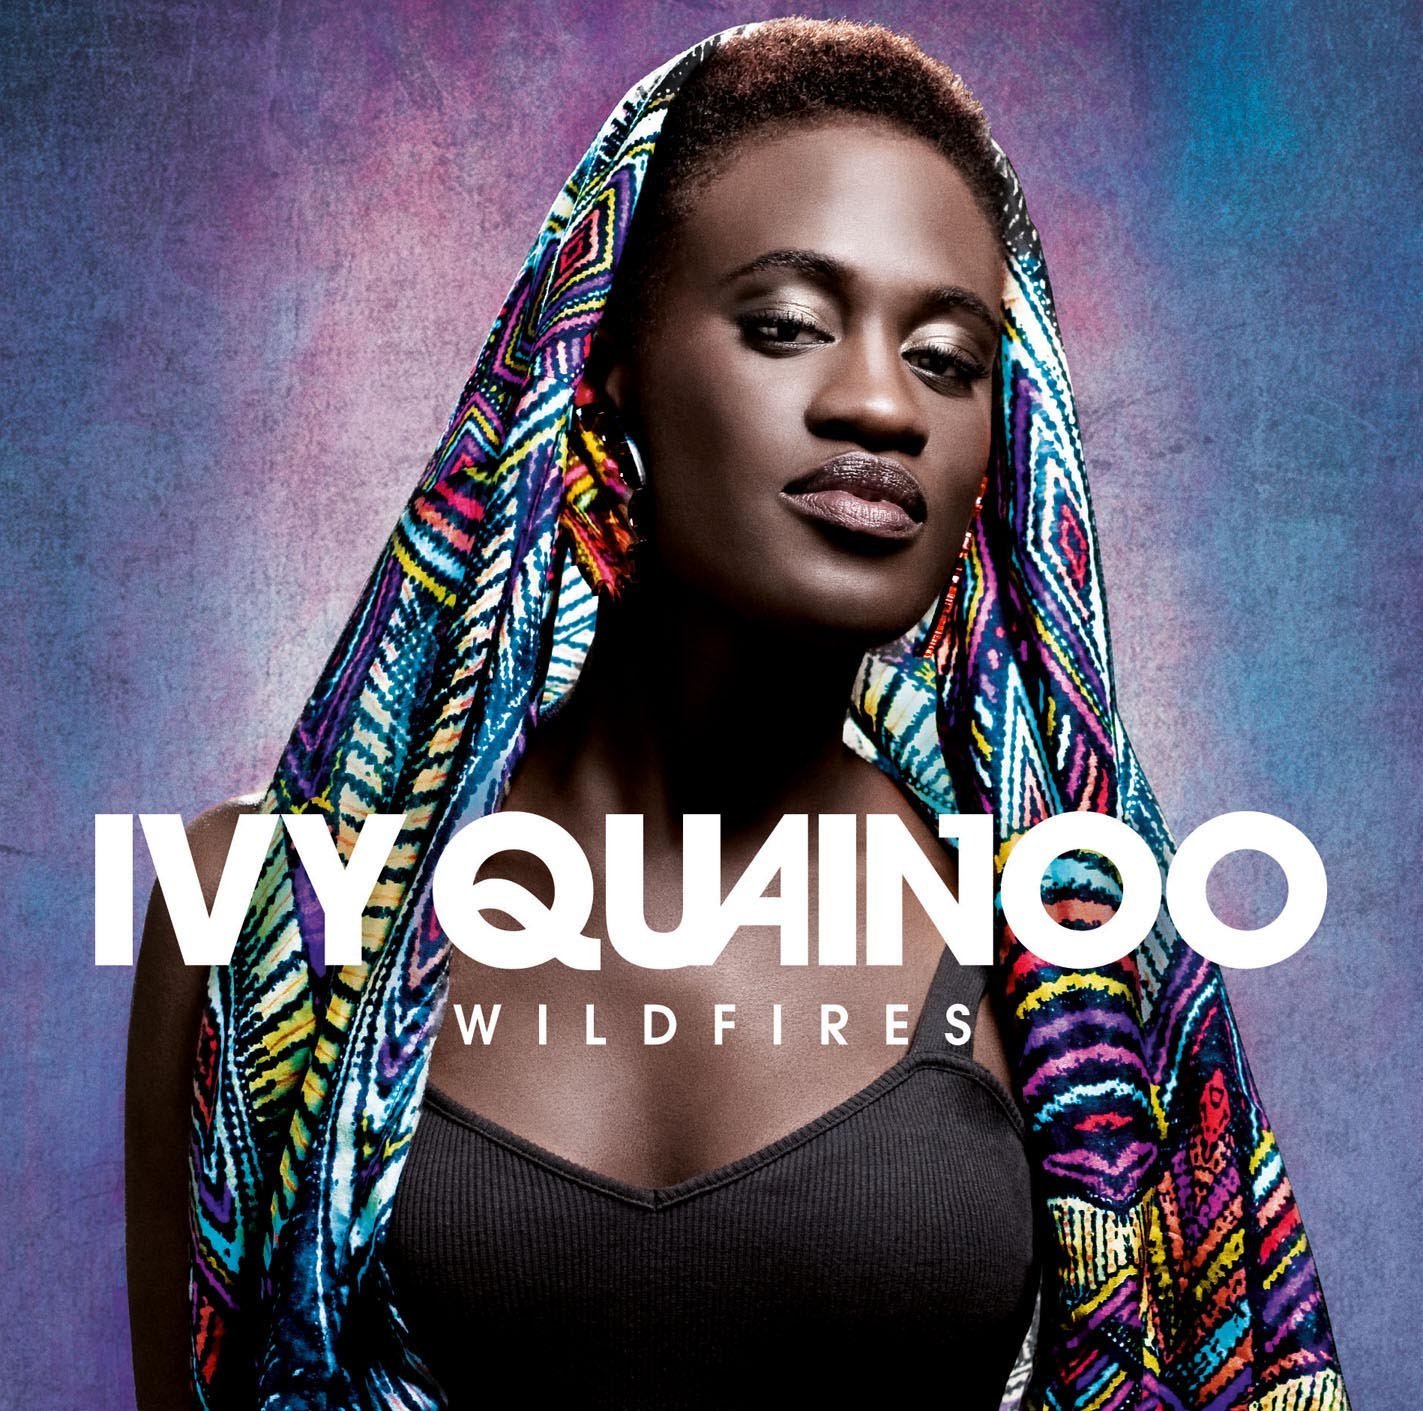 <strong>Ivy Quainoo</strong><br /> Wildfires (Album)